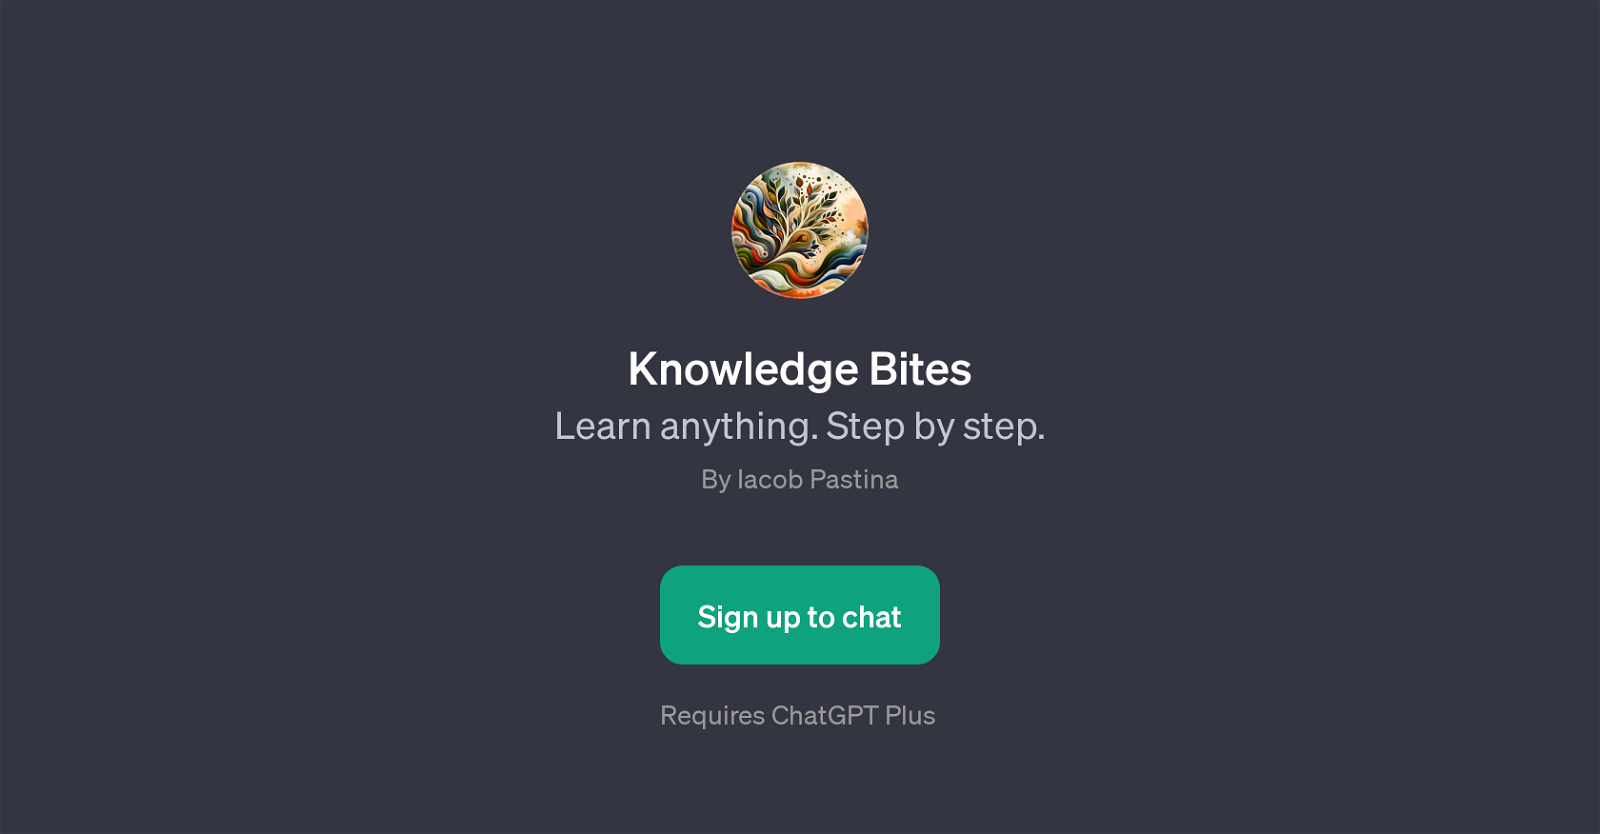 Knowledge Bites website